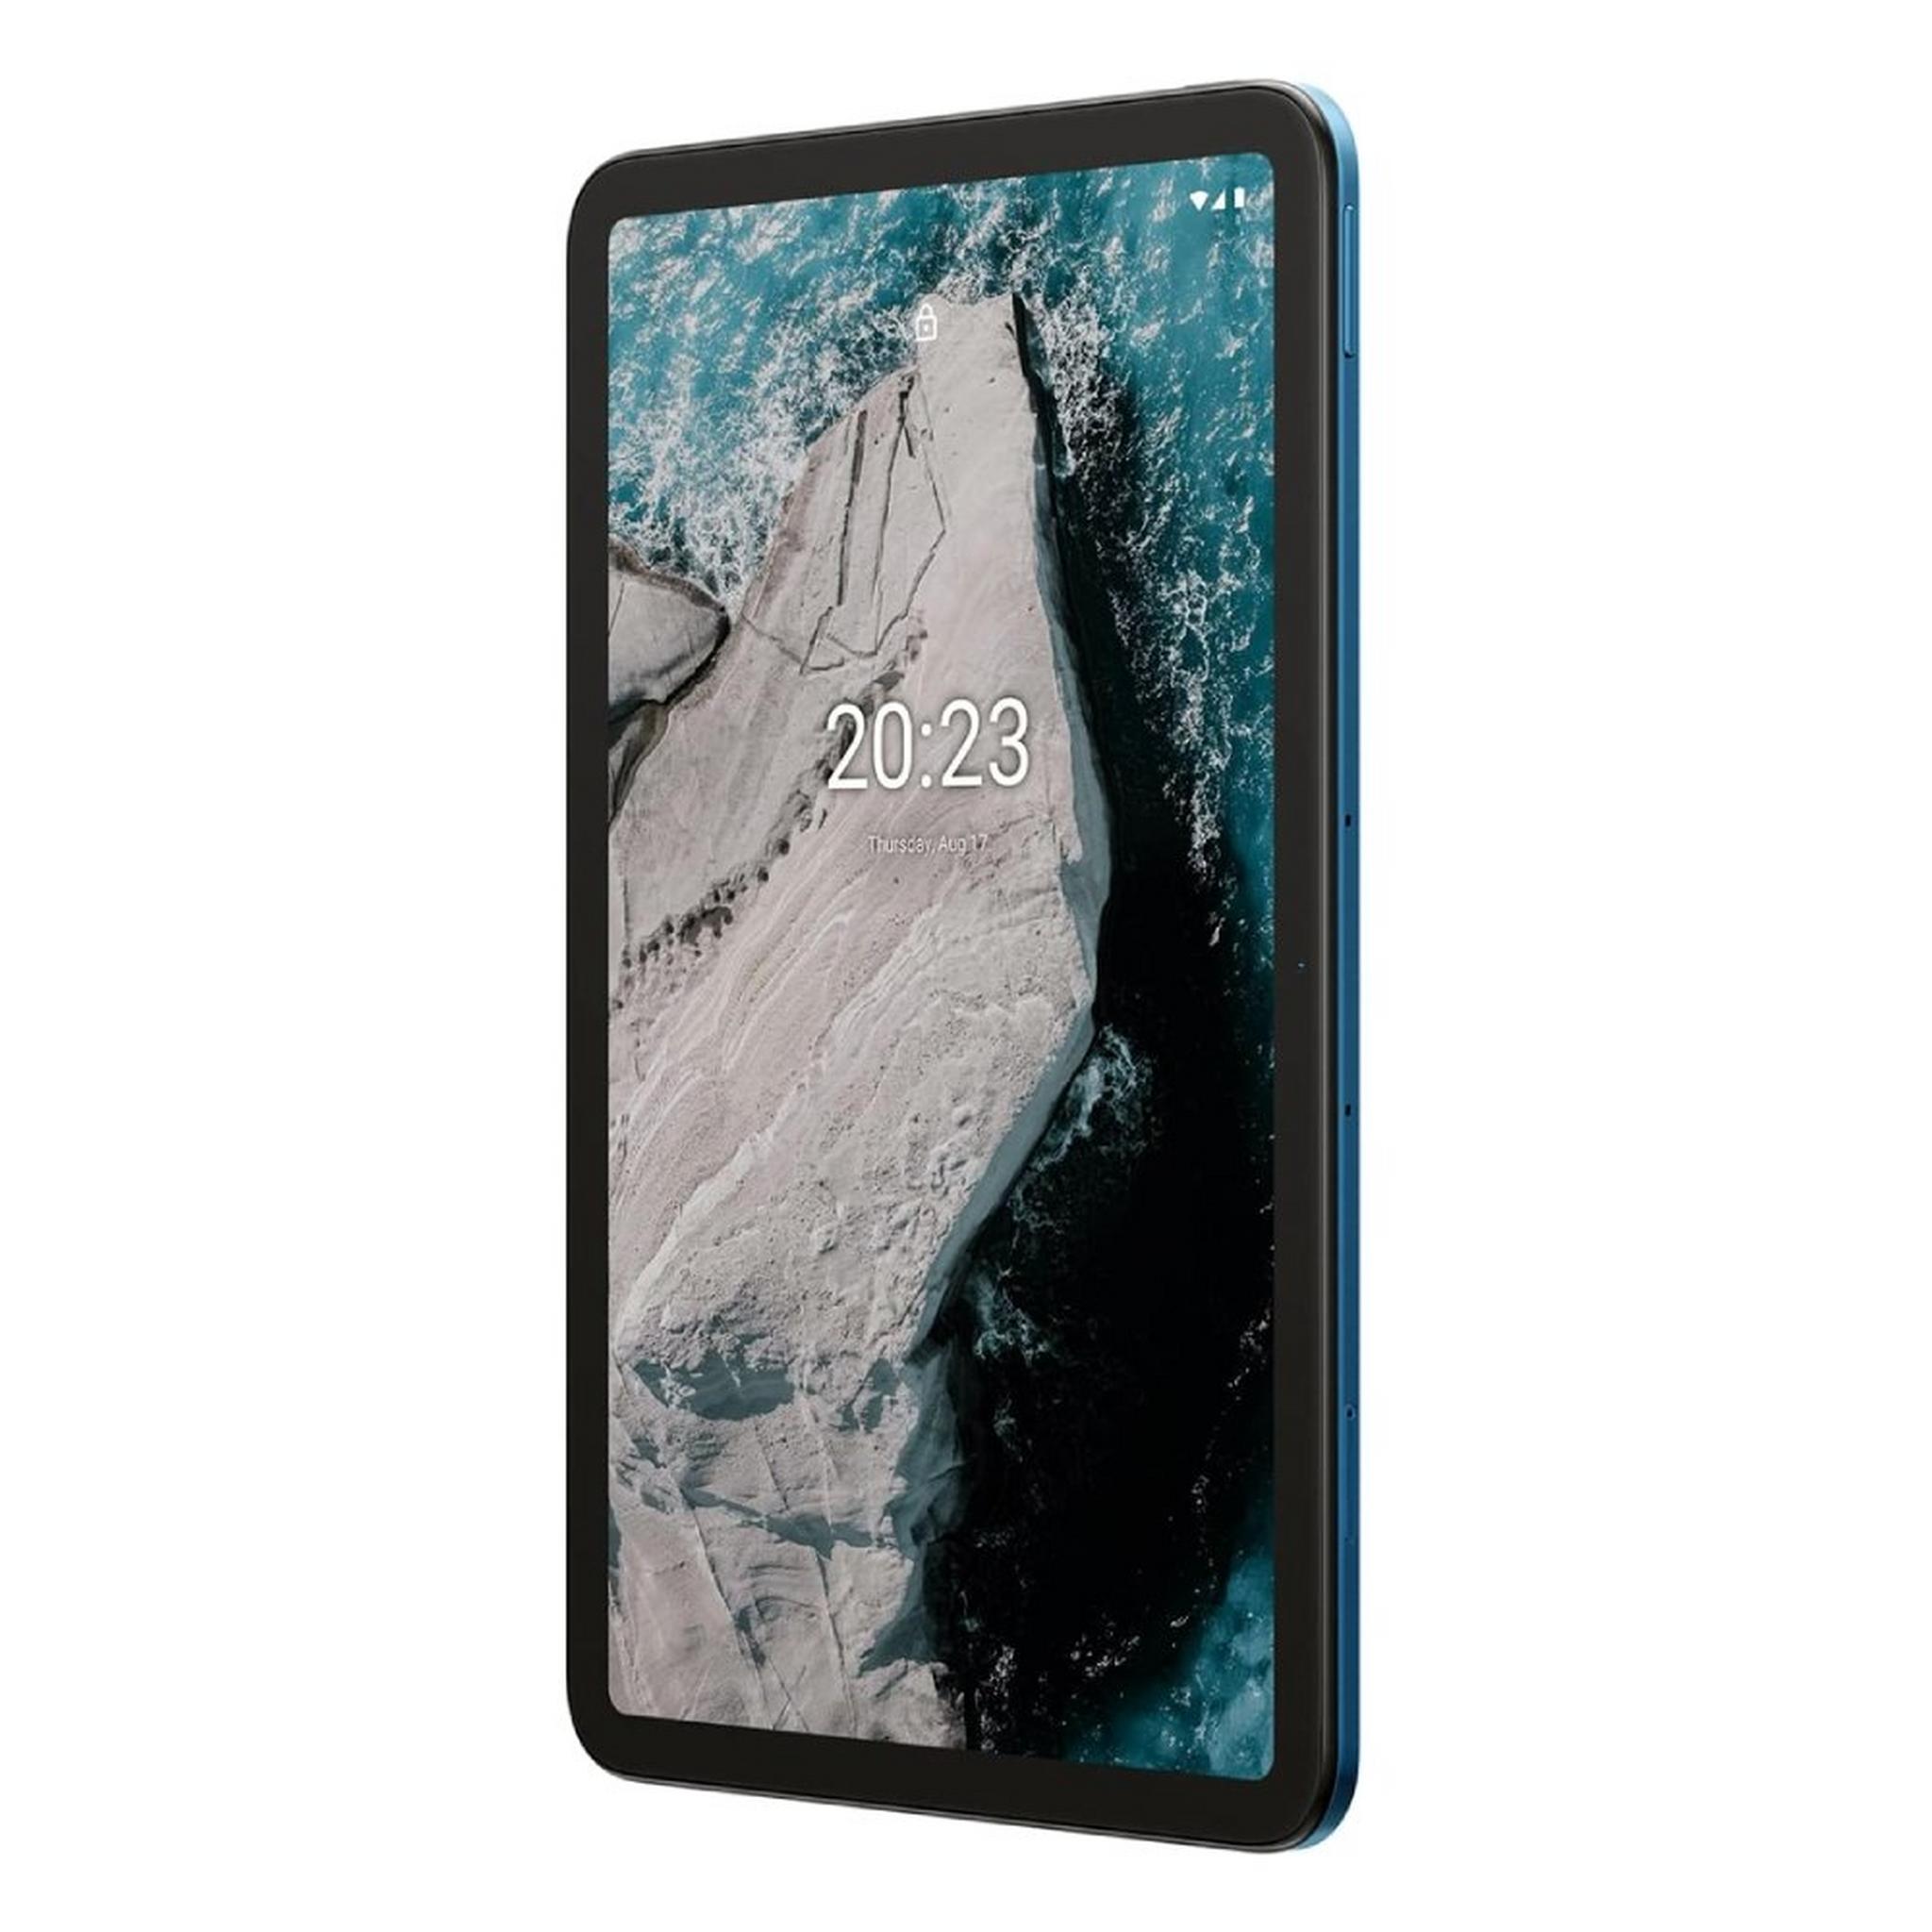 Nokia T20 TA, 64GB, 4G, 10.4-inch Tablet - Blue